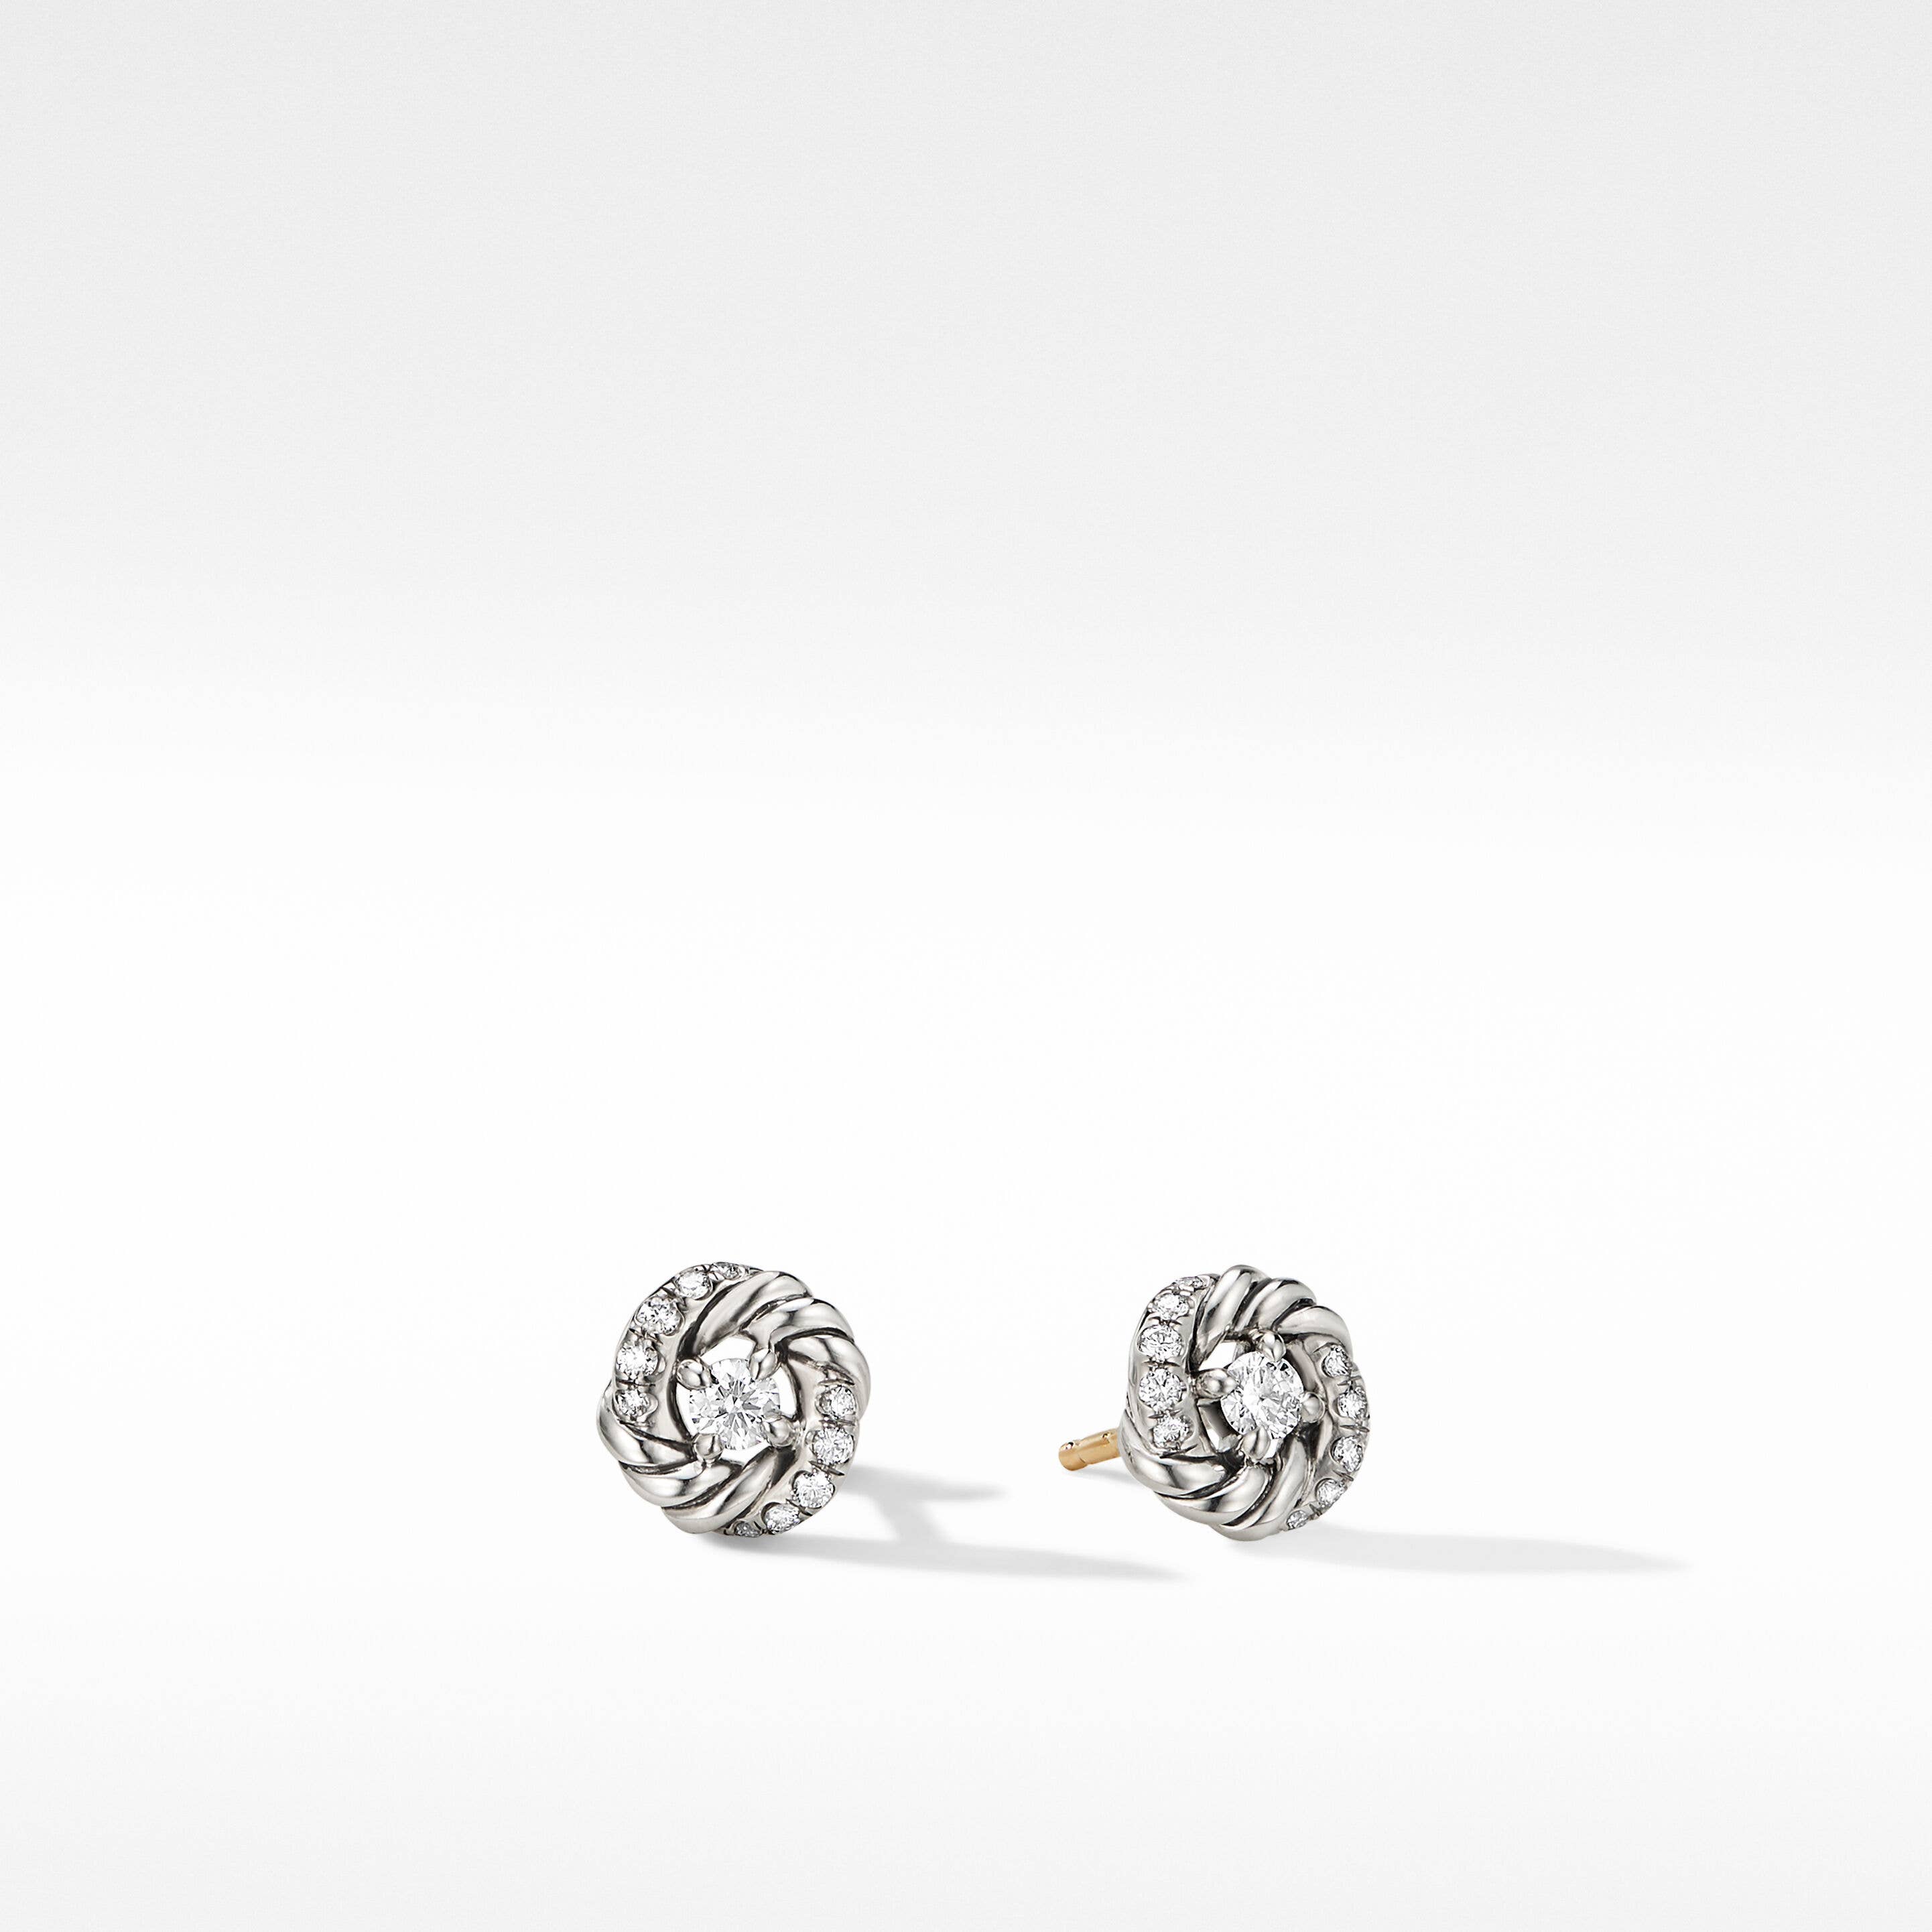 Petite Infinity Stud Earrings in Sterling Silver with Diamonds